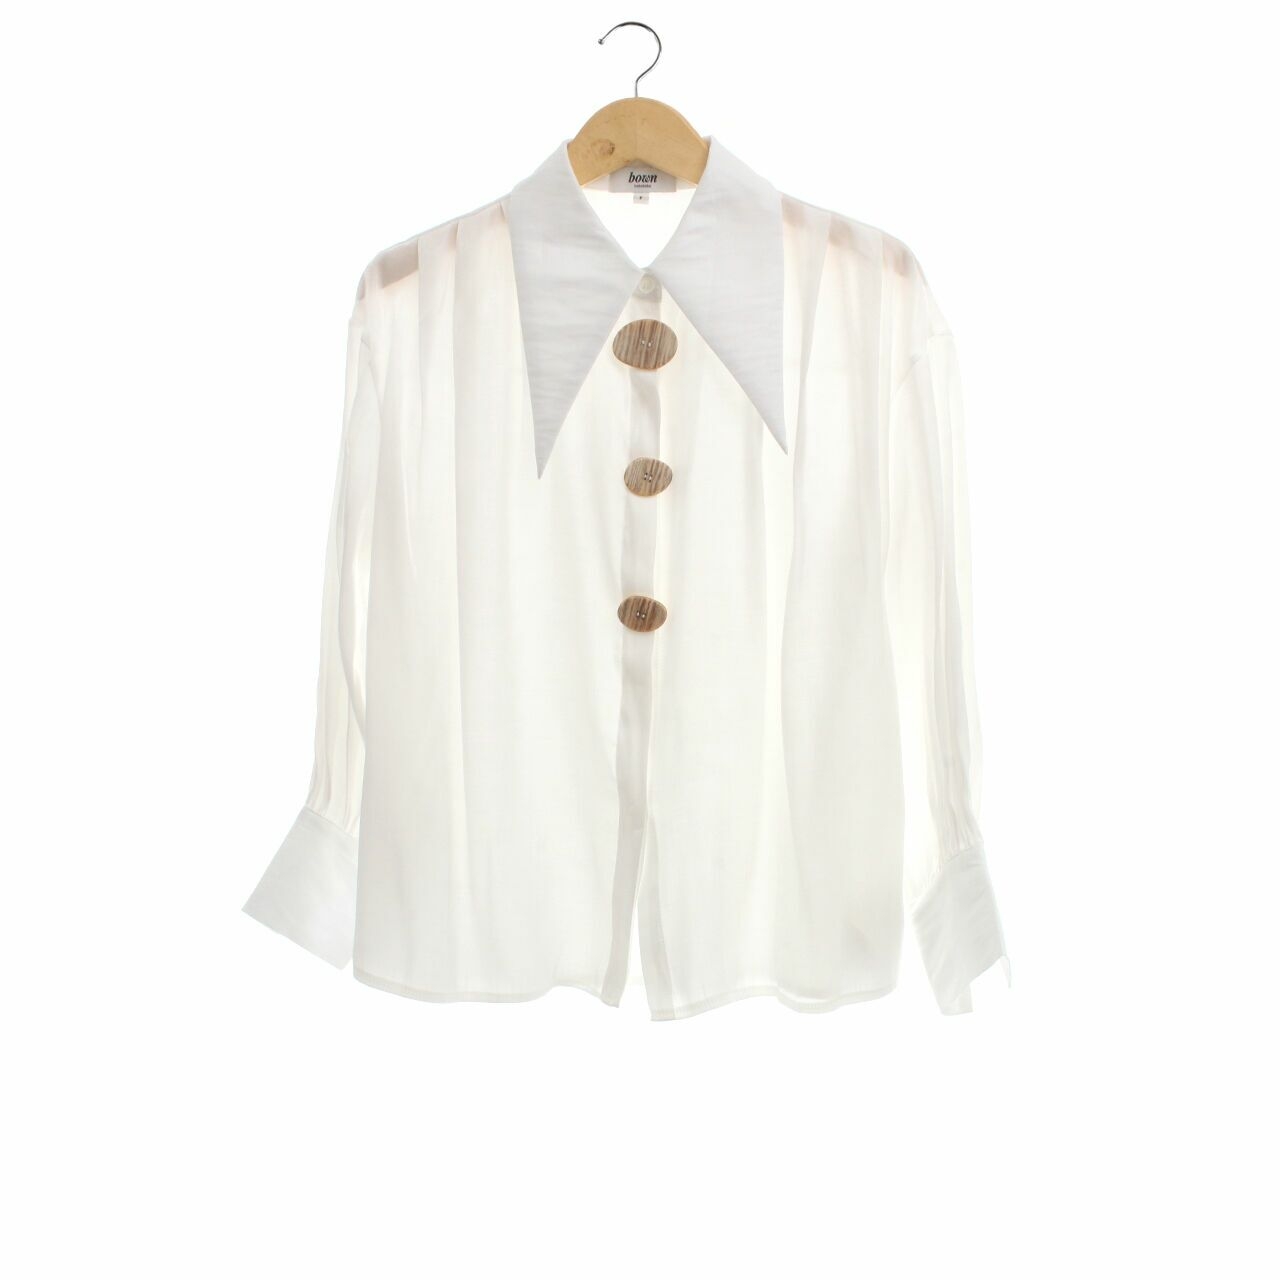 Bown White Long Sleeve Shirt